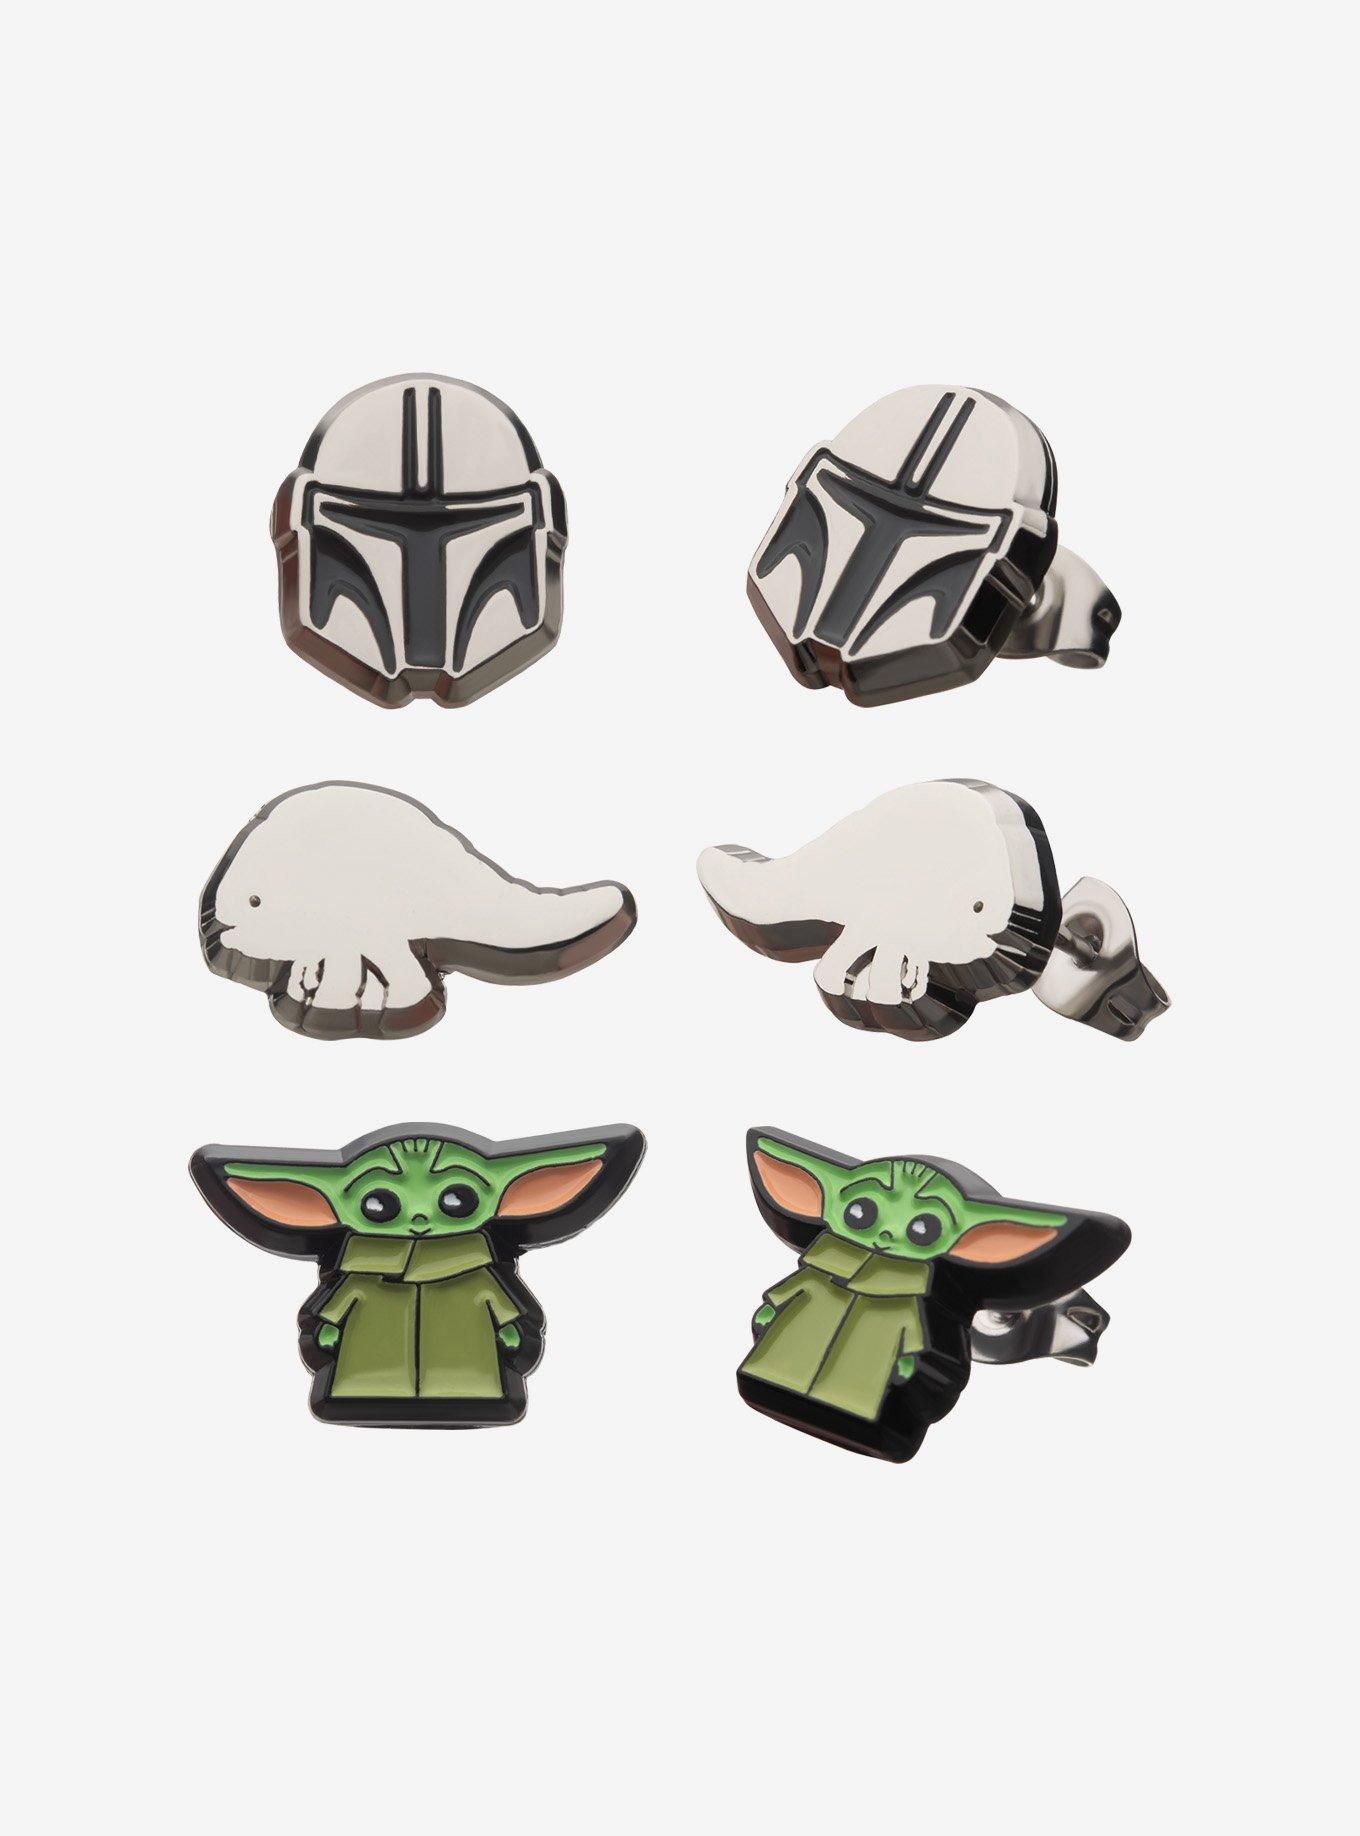 Star Wars: The Mandalorian Grogu Helmet and Blurrg Earring Set